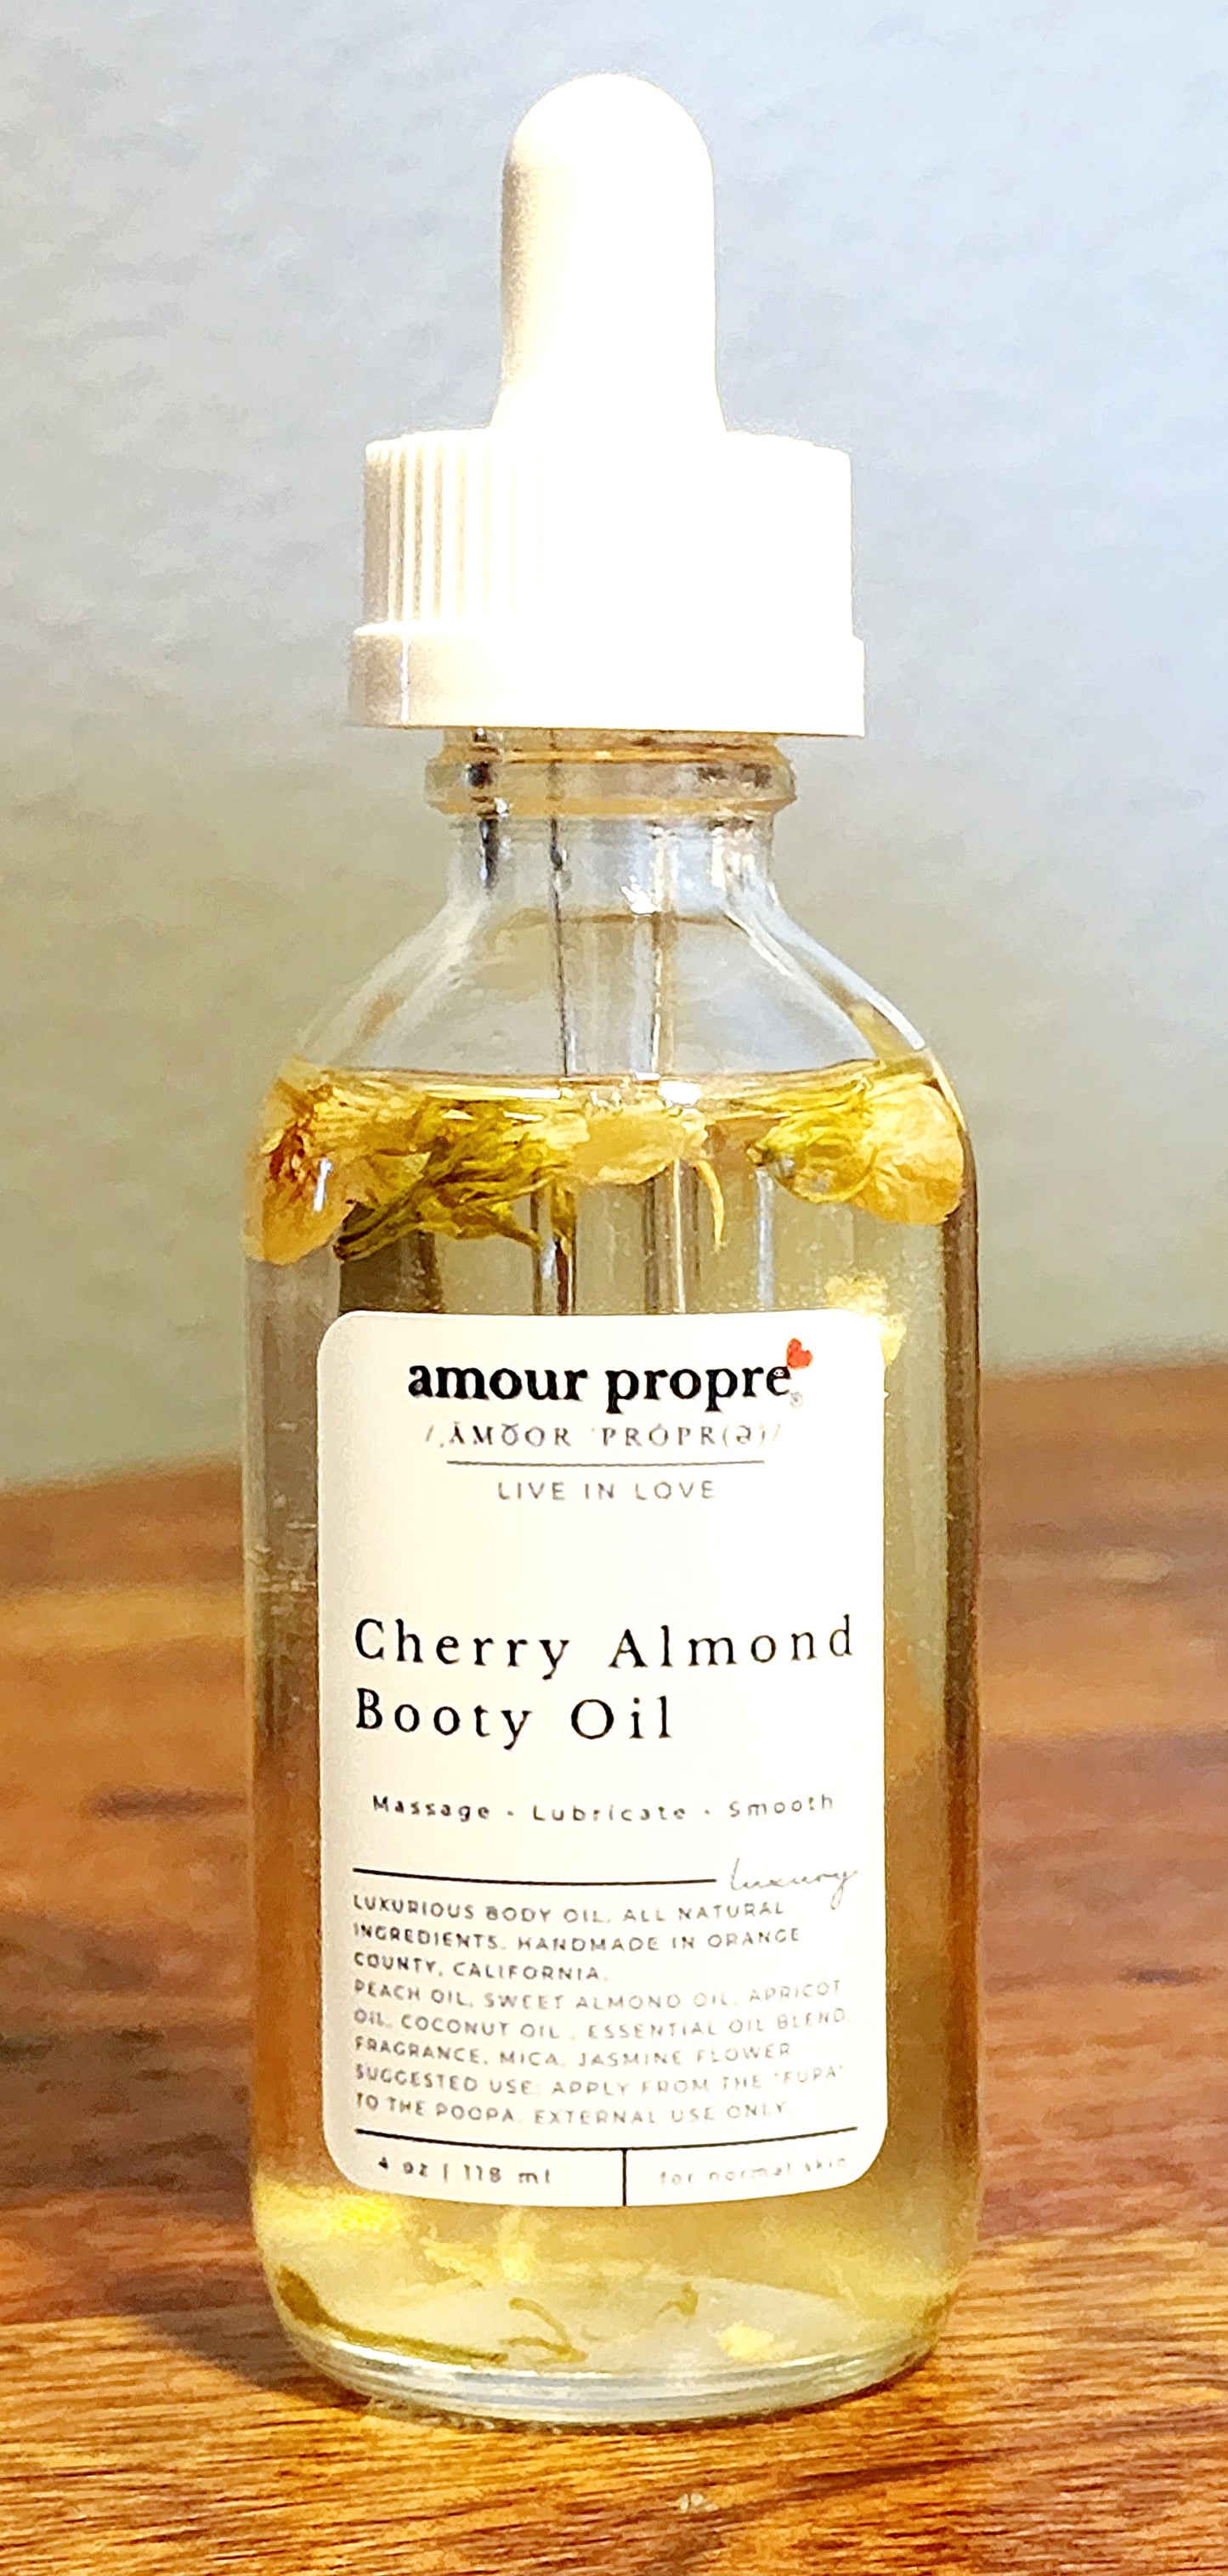 Cherry Almond Booty Oil